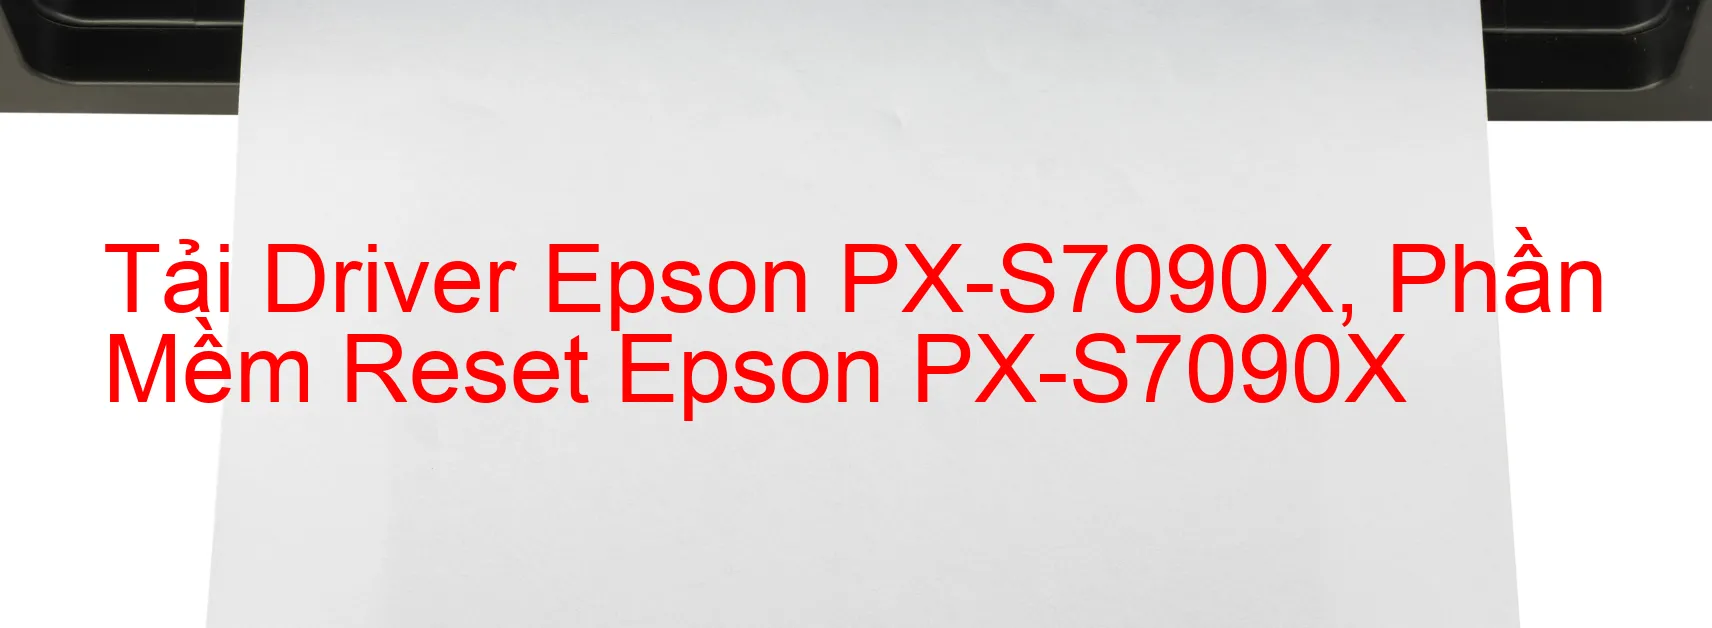 Driver Epson PX-S7090X, Phần Mềm Reset Epson PX-S7090X